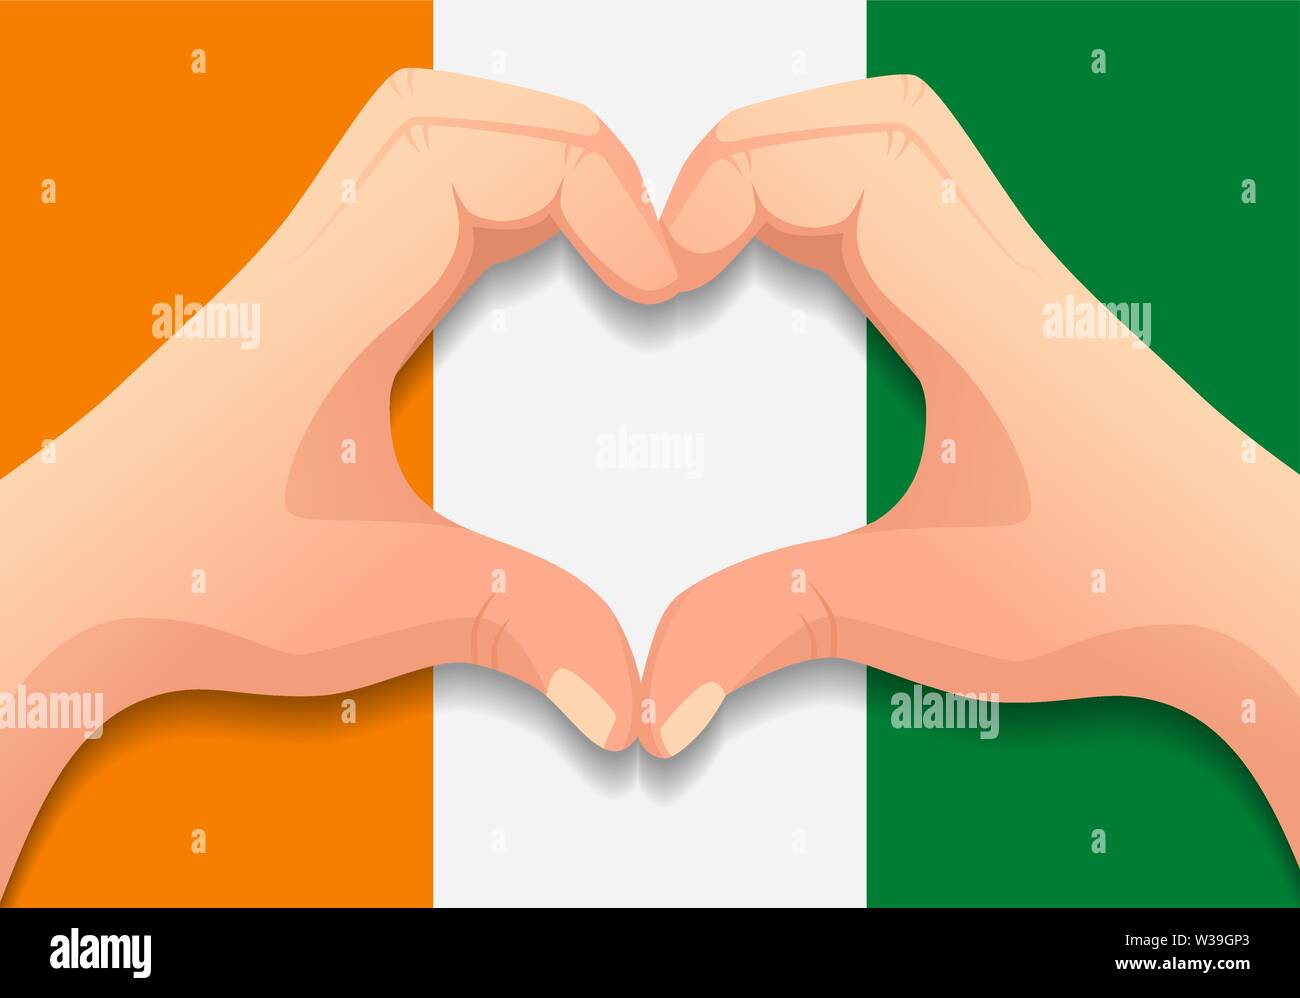 Cote d'ivoire - Ivory Coast flag and hand heart shape. Patriotic